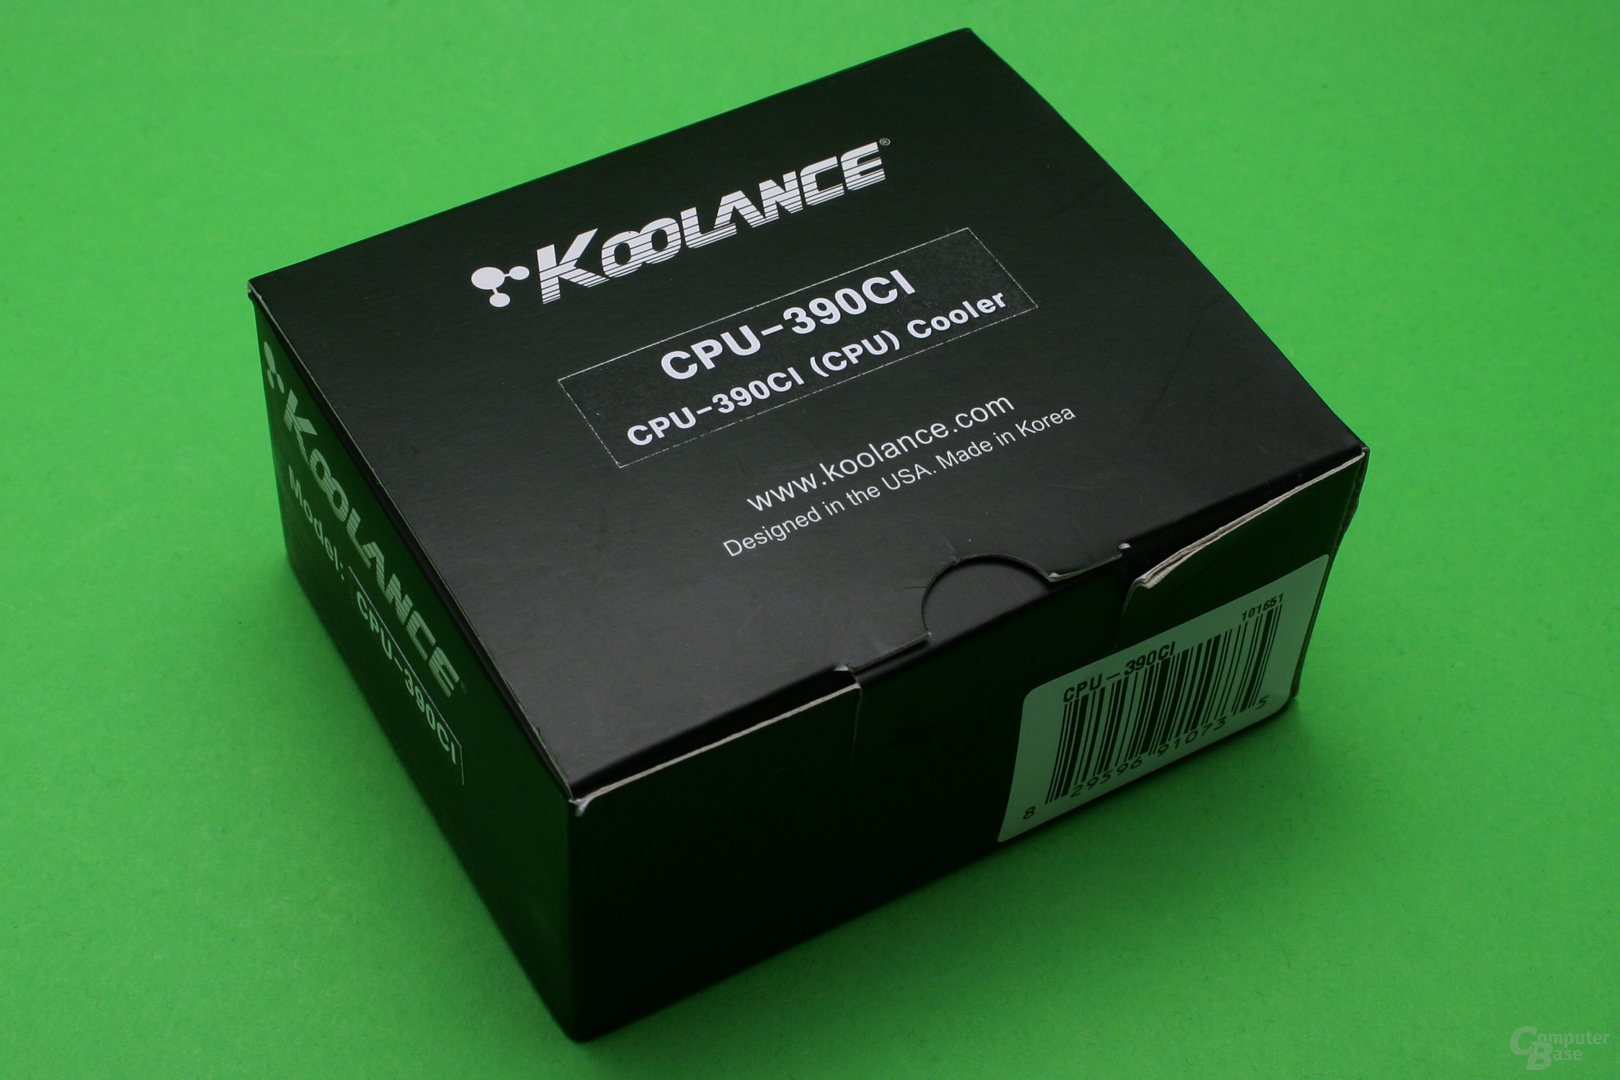 Koolance CPU-390